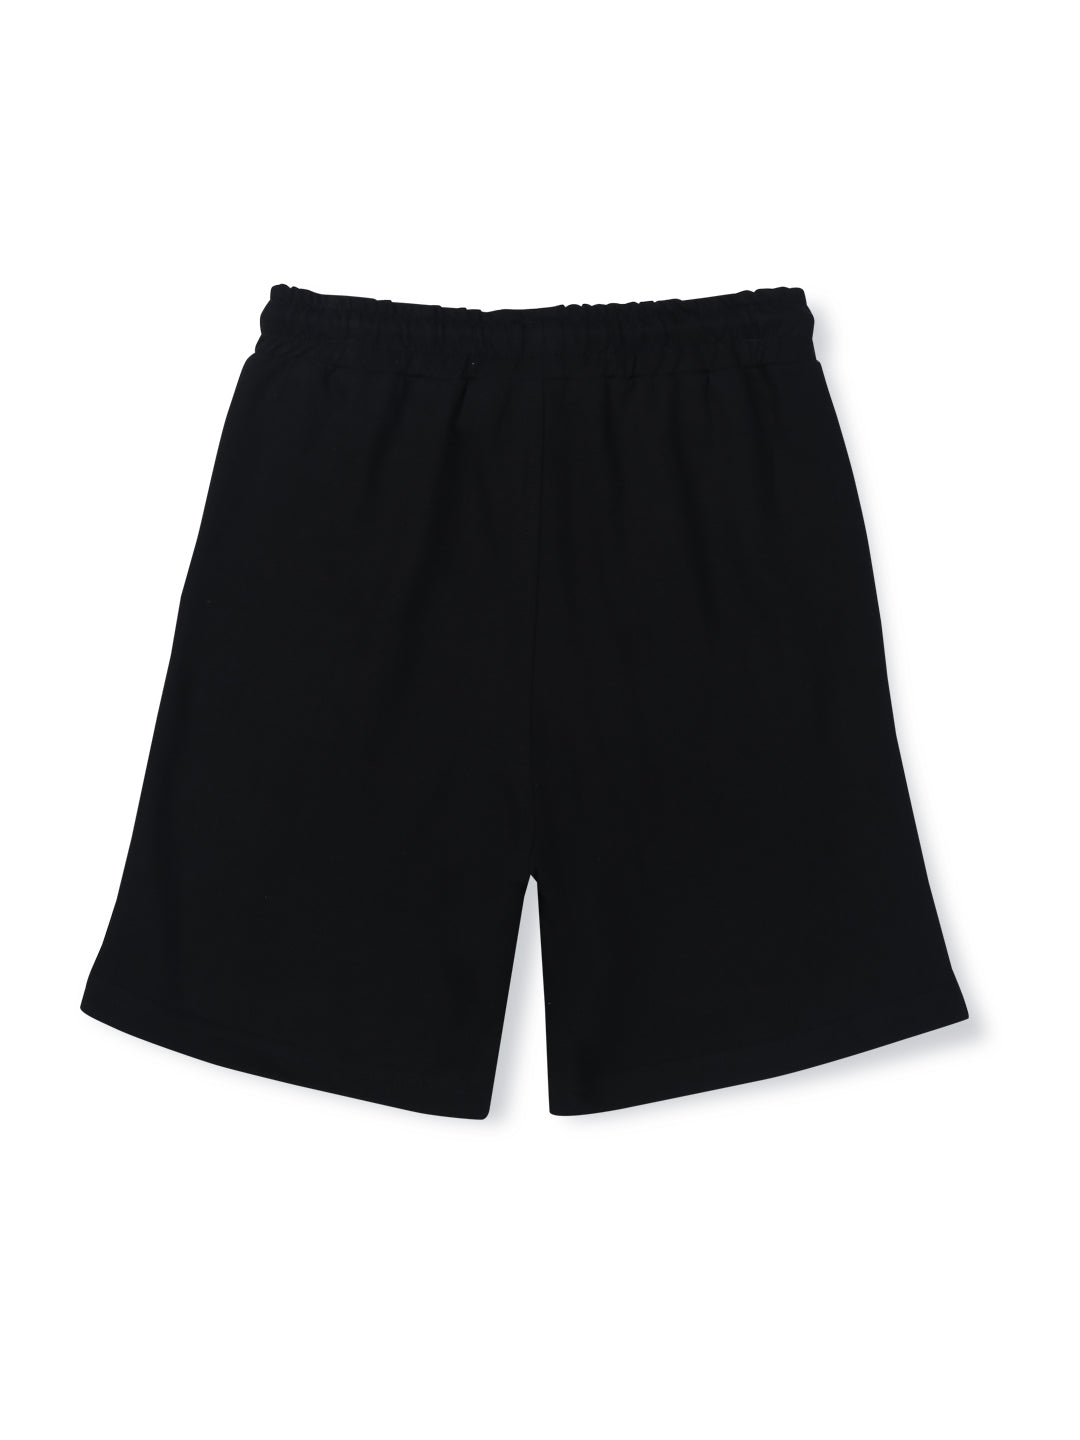 Boys Black Cotton Solid Shorts